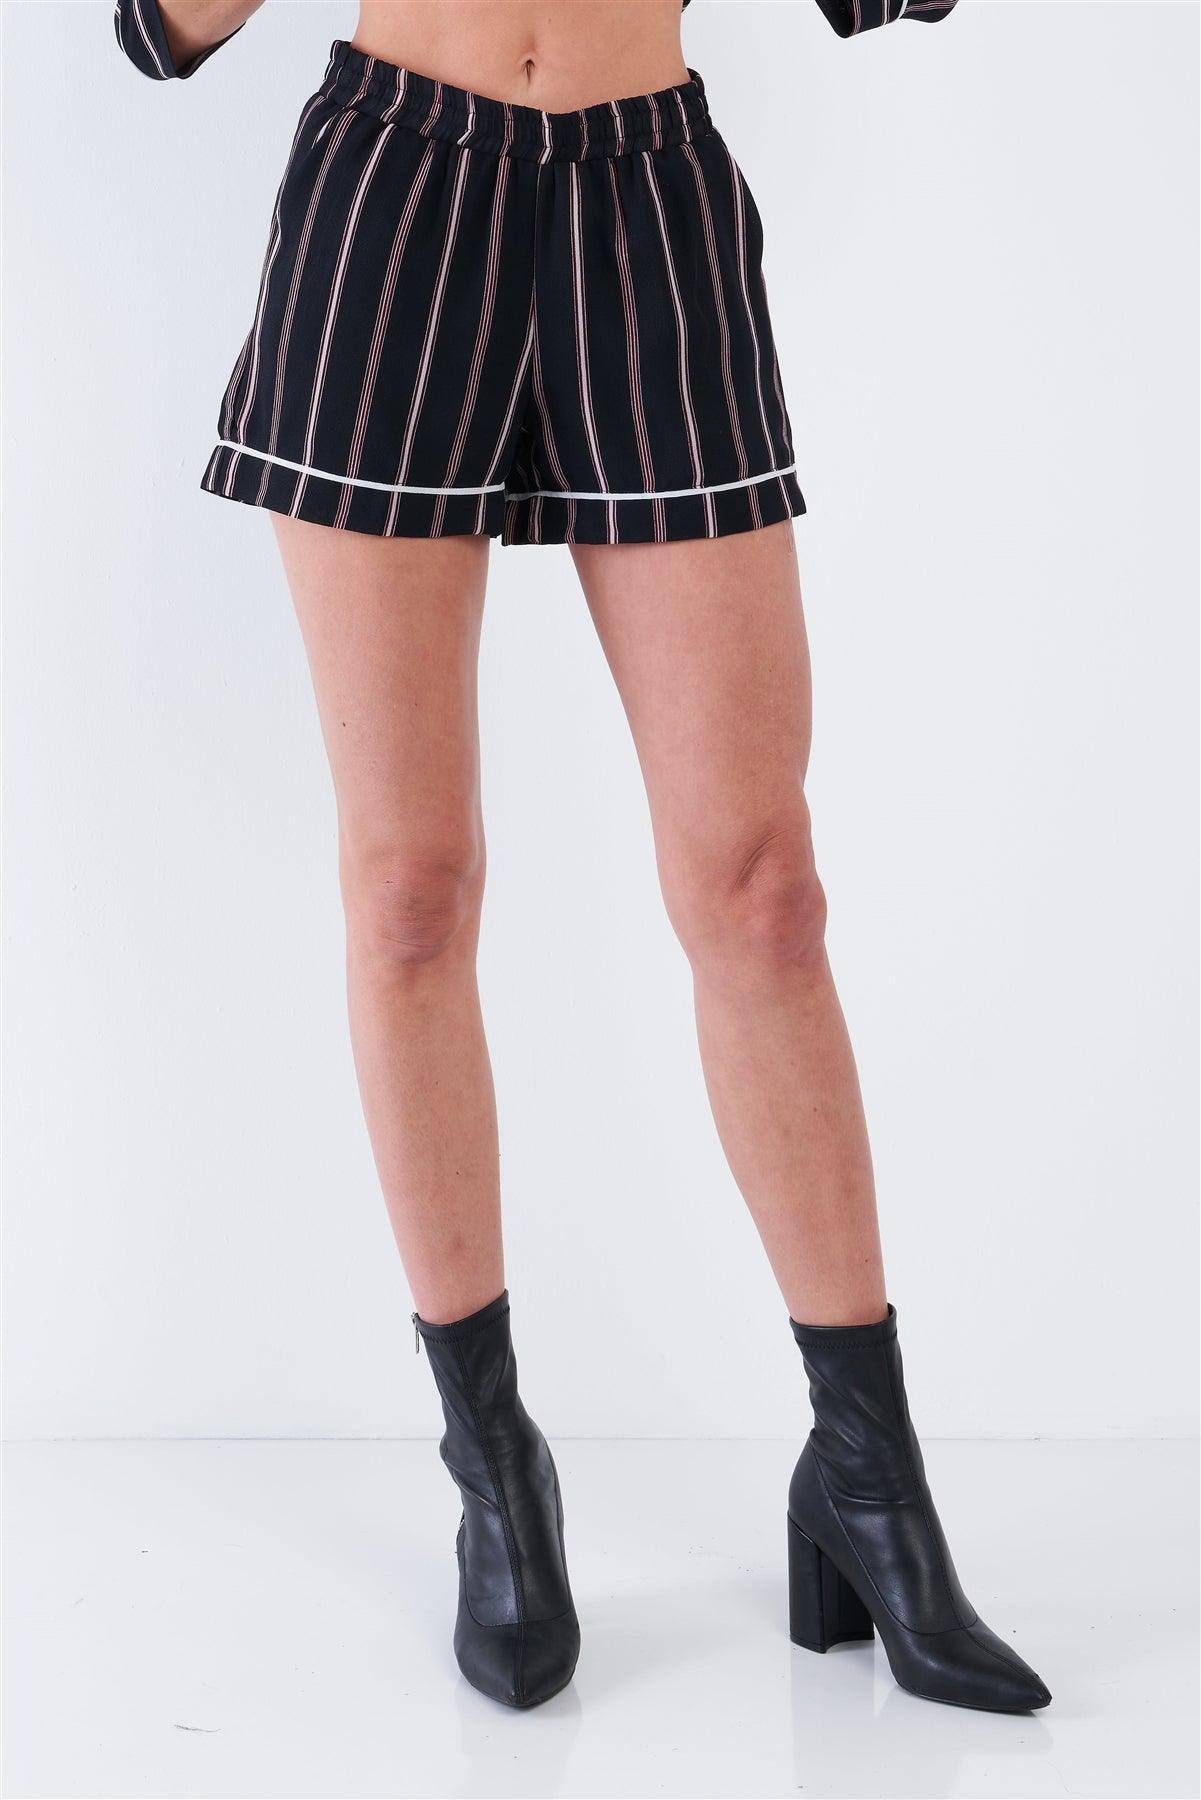 Black Stripe Chiffon Long Sleeve Button Top & Shorts Loungewear Set /2-2-2